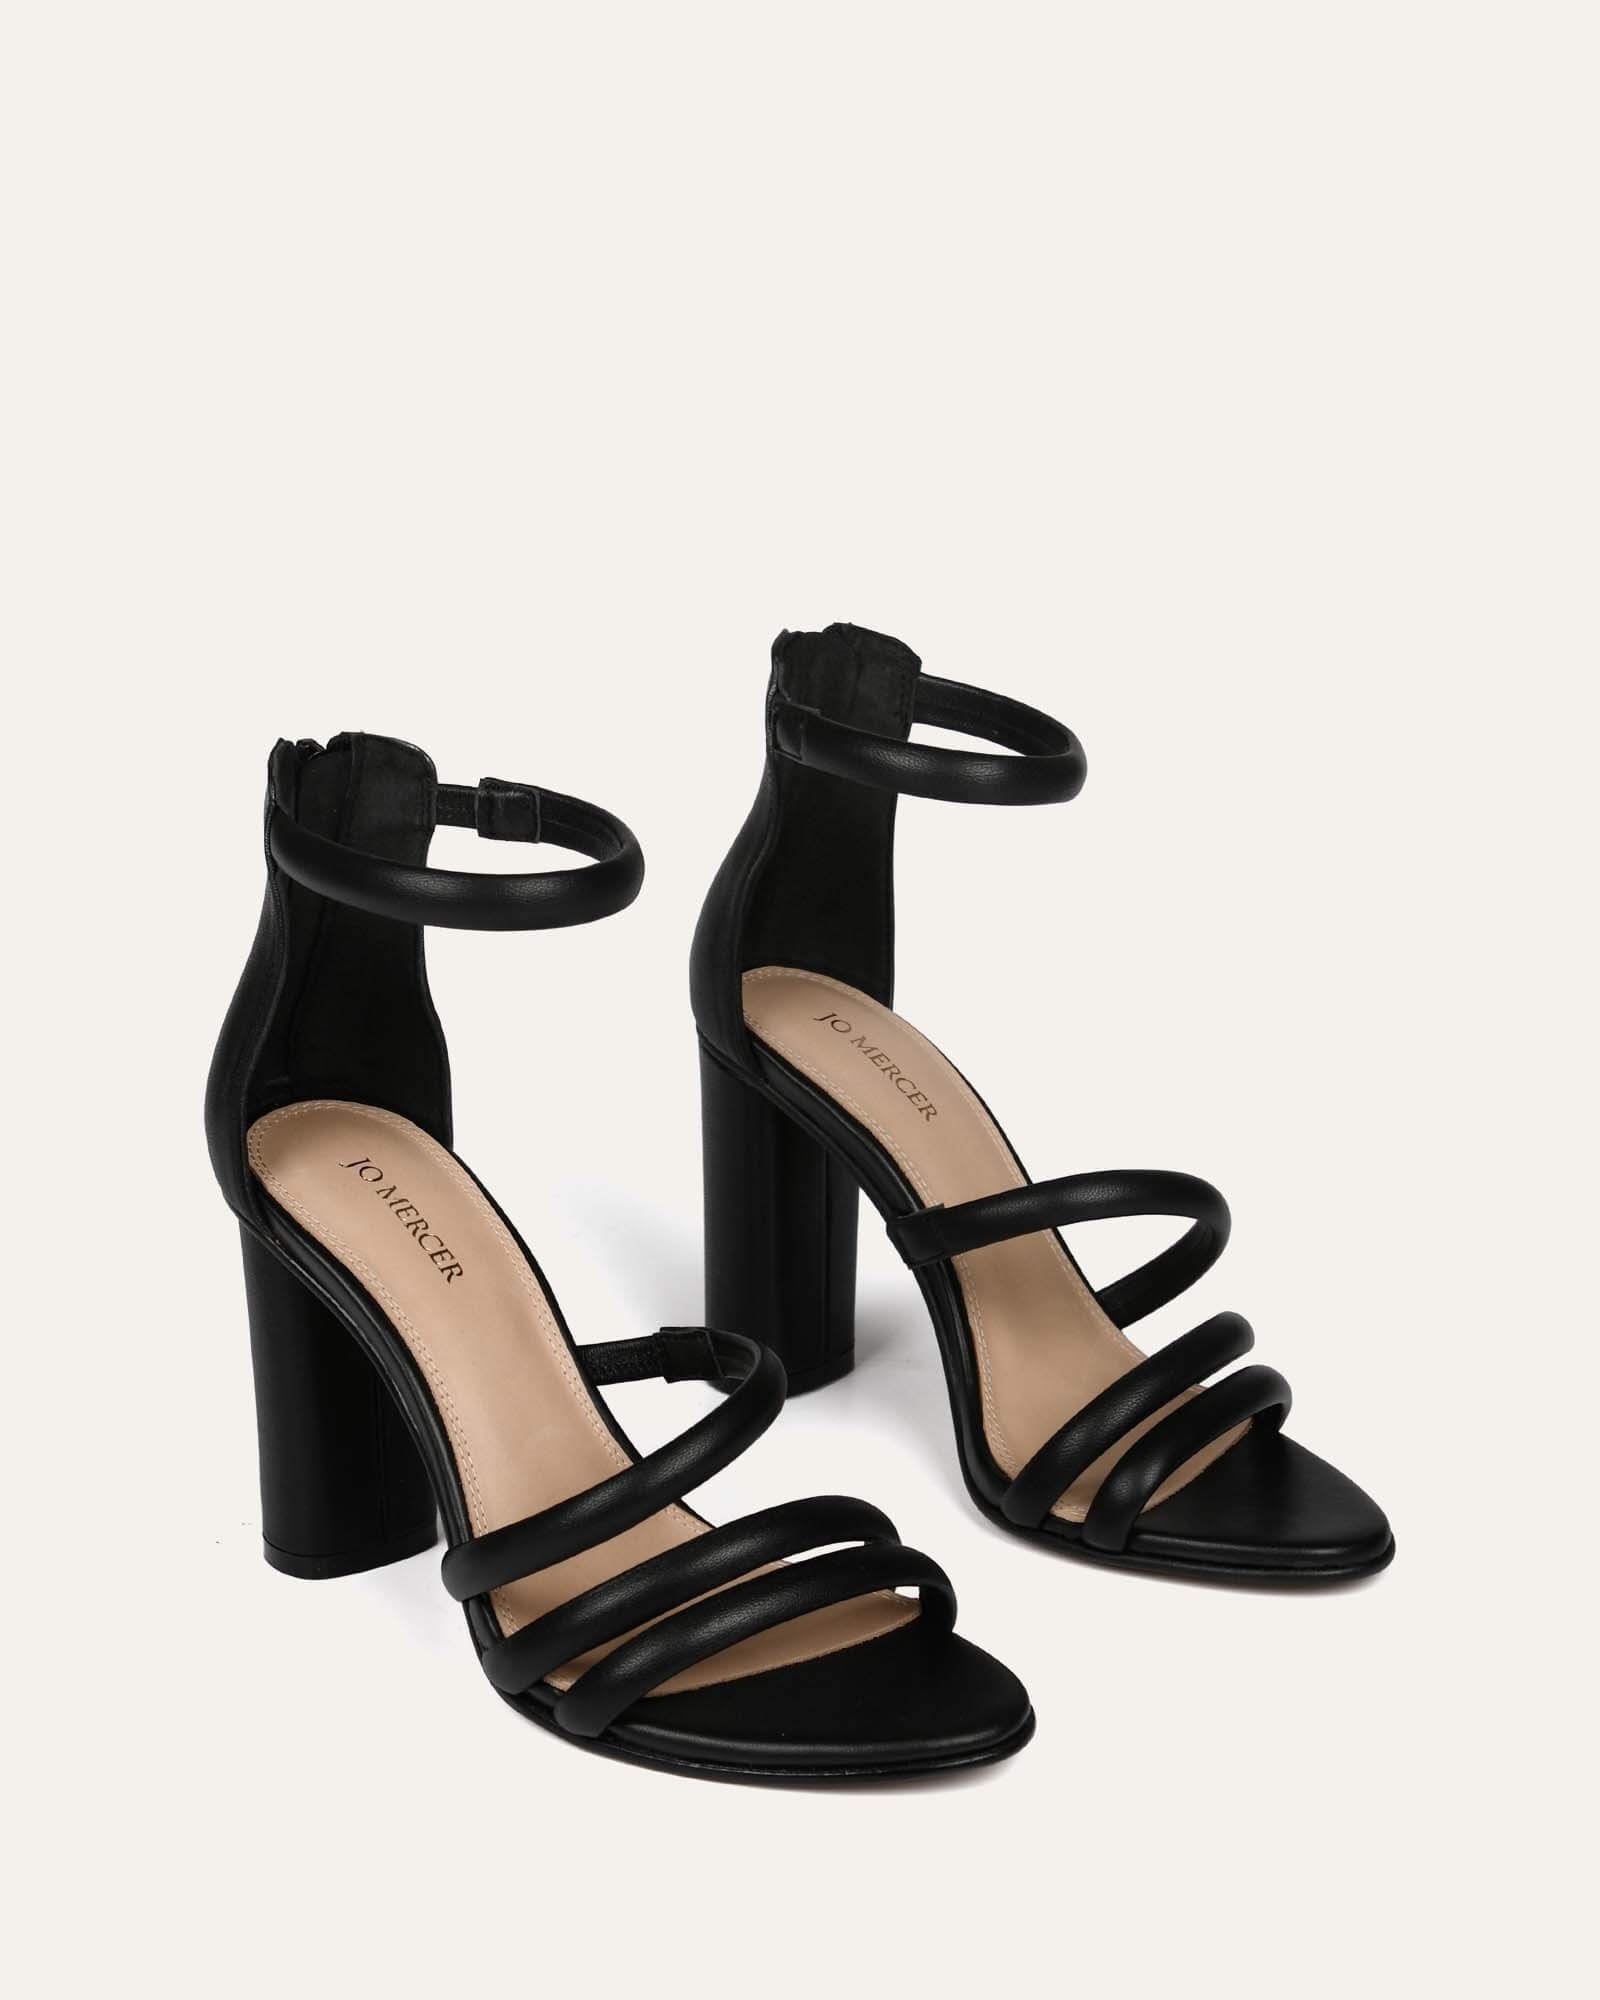 Golden sandals for women stylish heels - TrishaStore.com